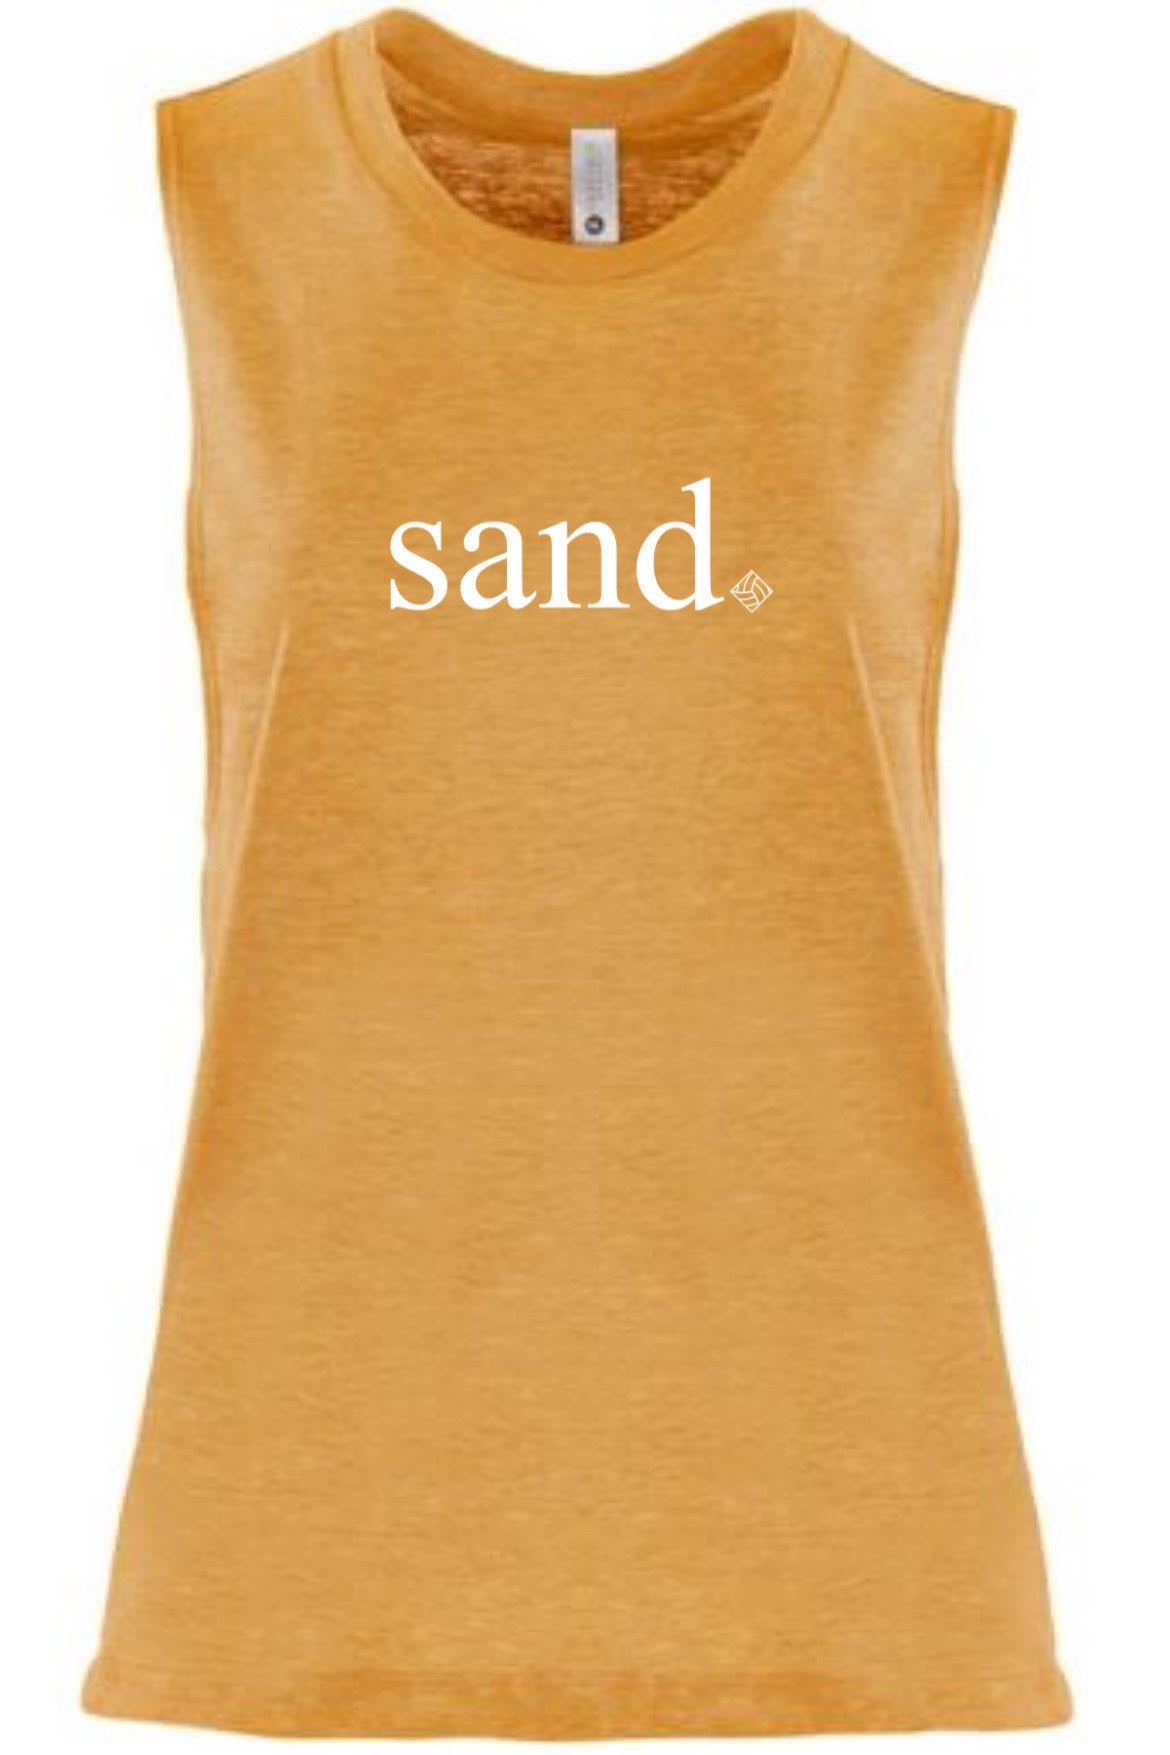 Women's Sand Tank